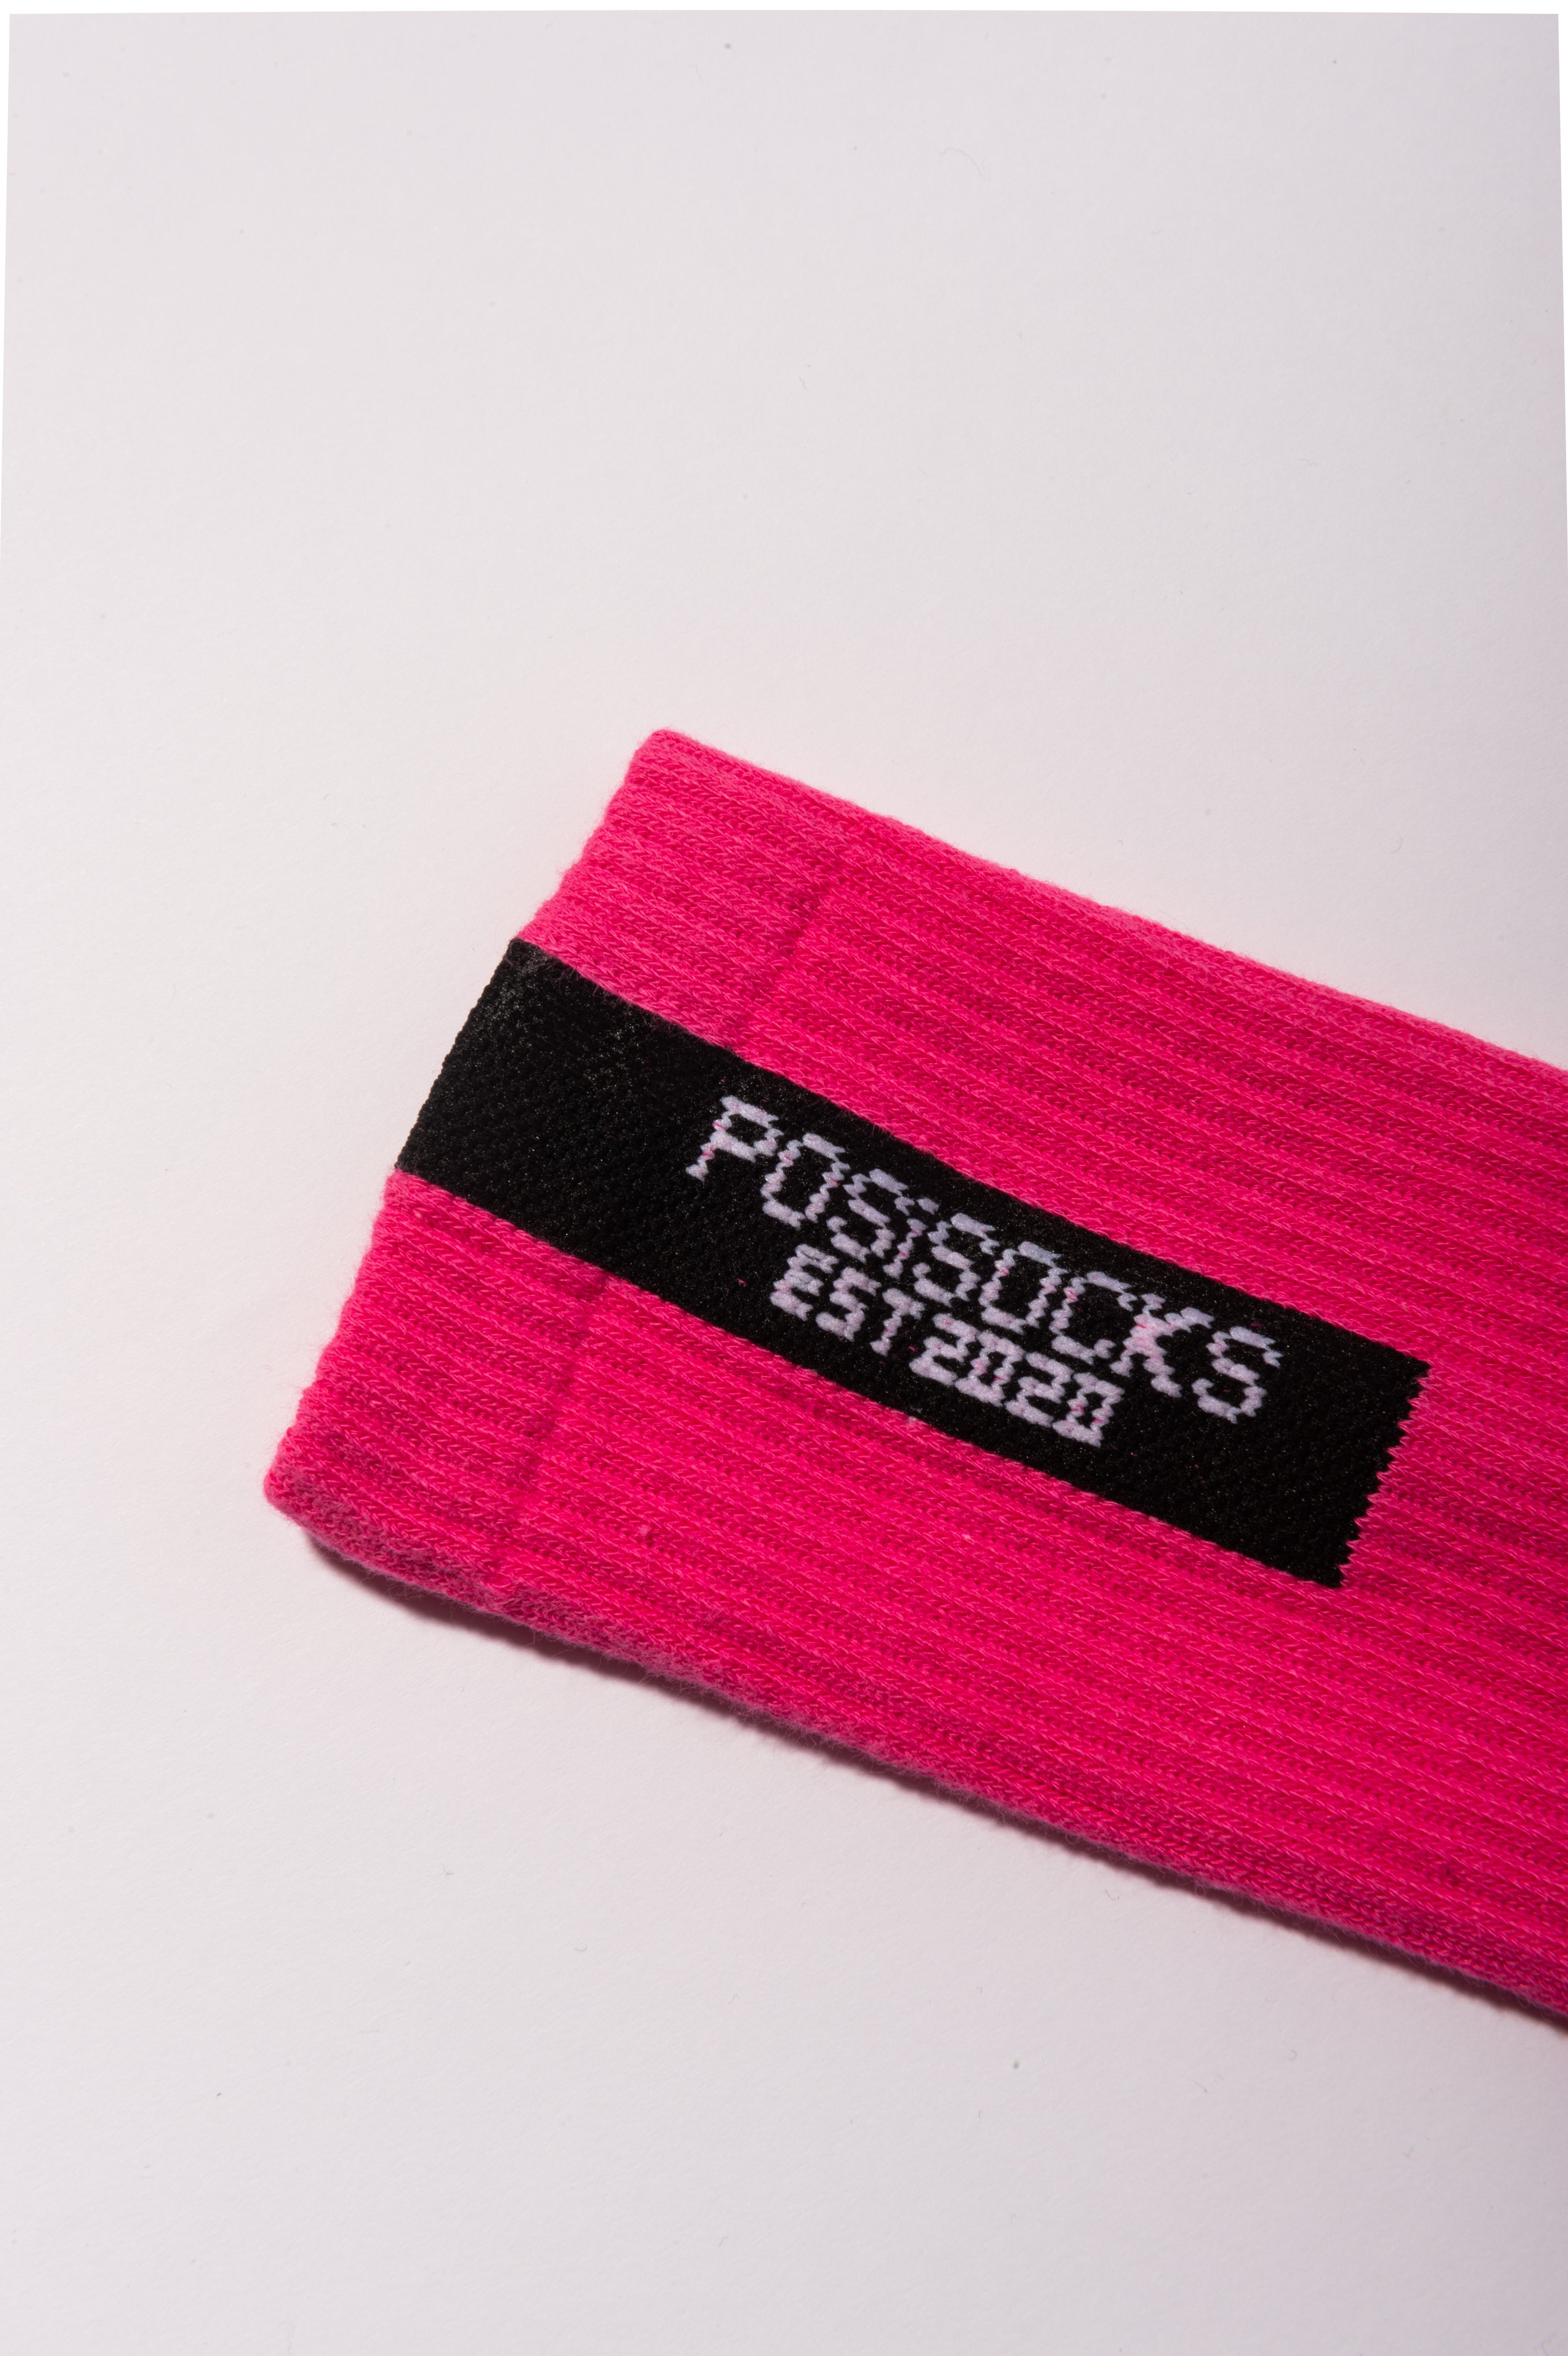 Lifestyle Women's Crew Pink Socks